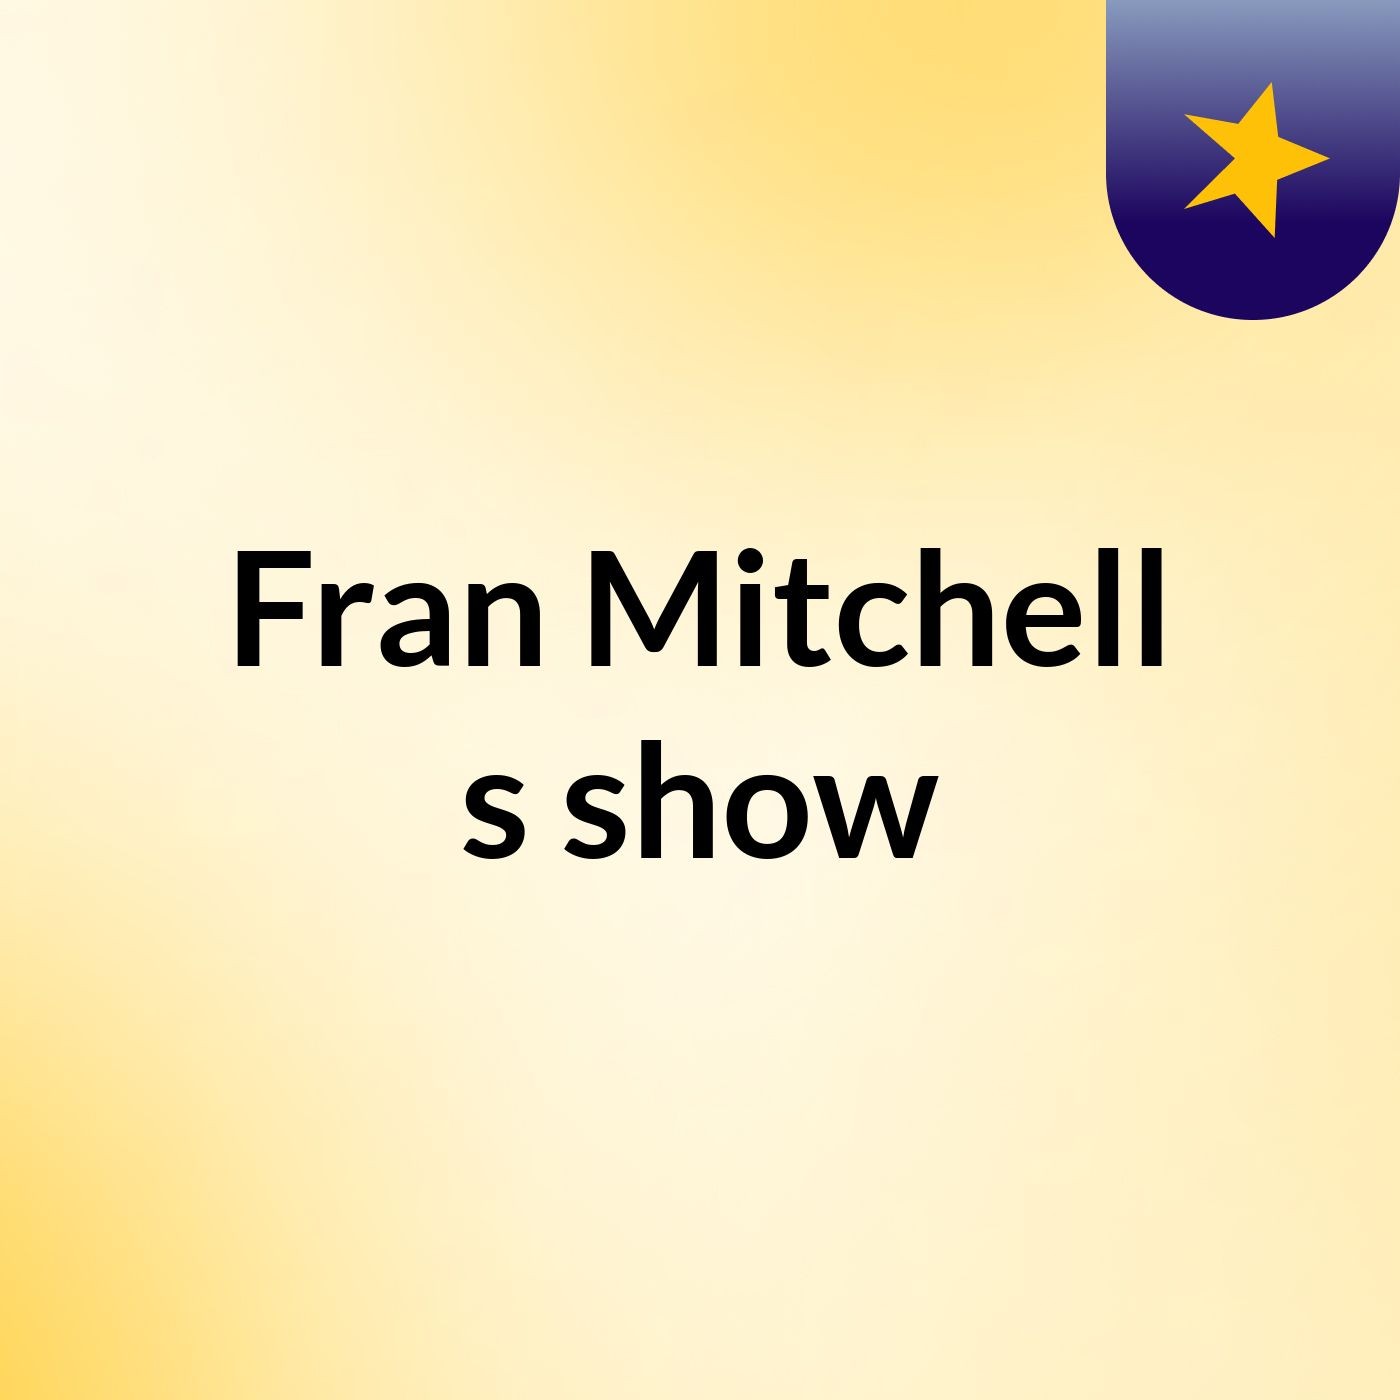 Fran Mitchell's show